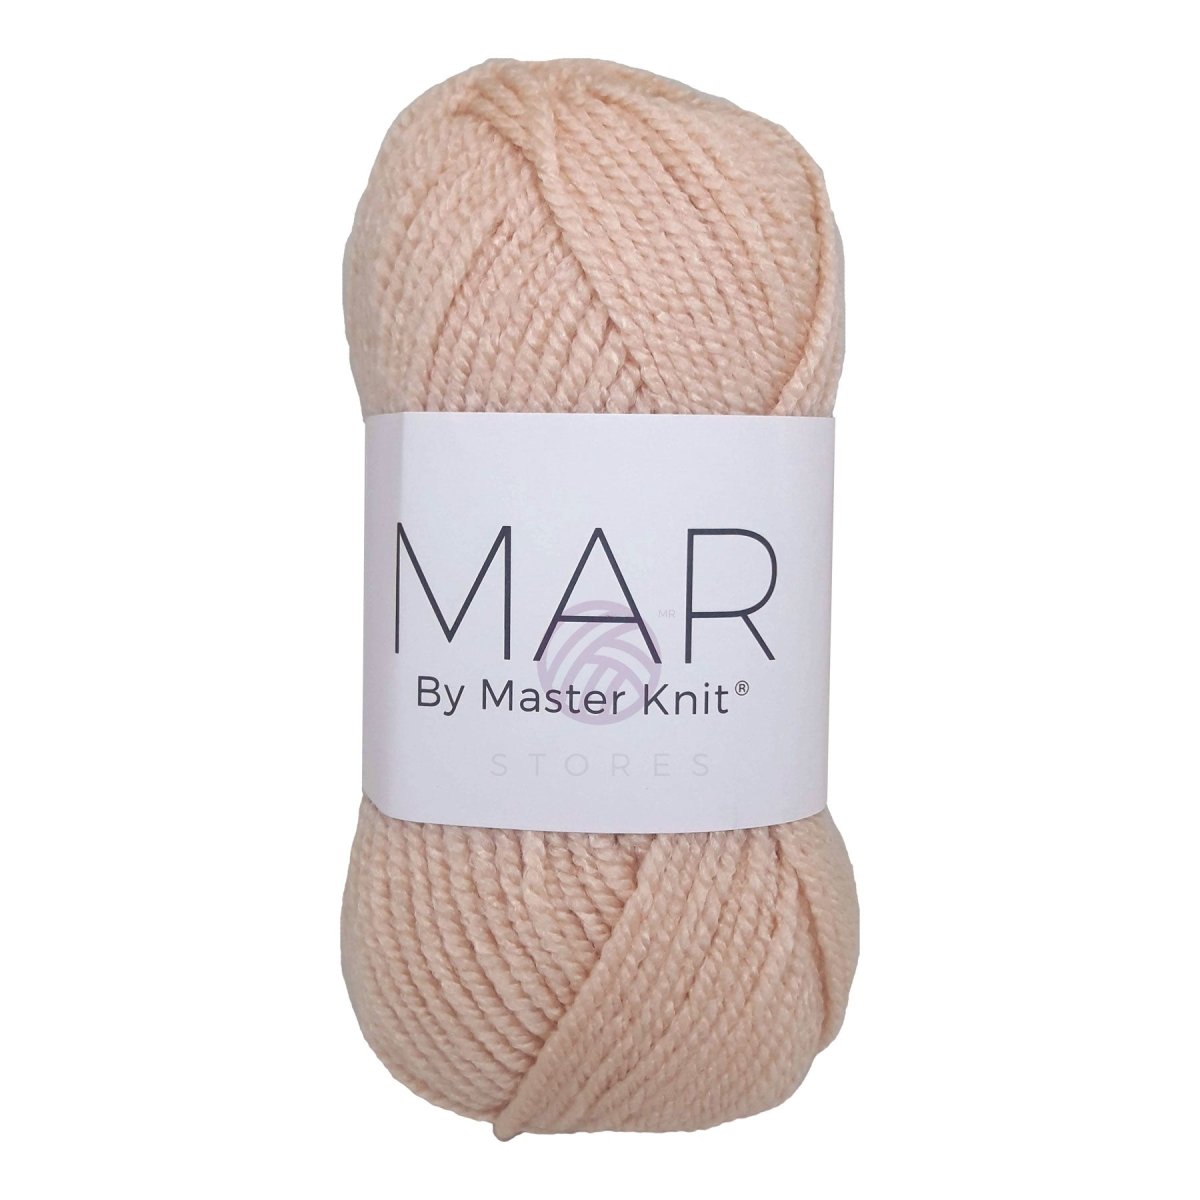 MAR - Chunky - Crochetstores9135-736745051438319